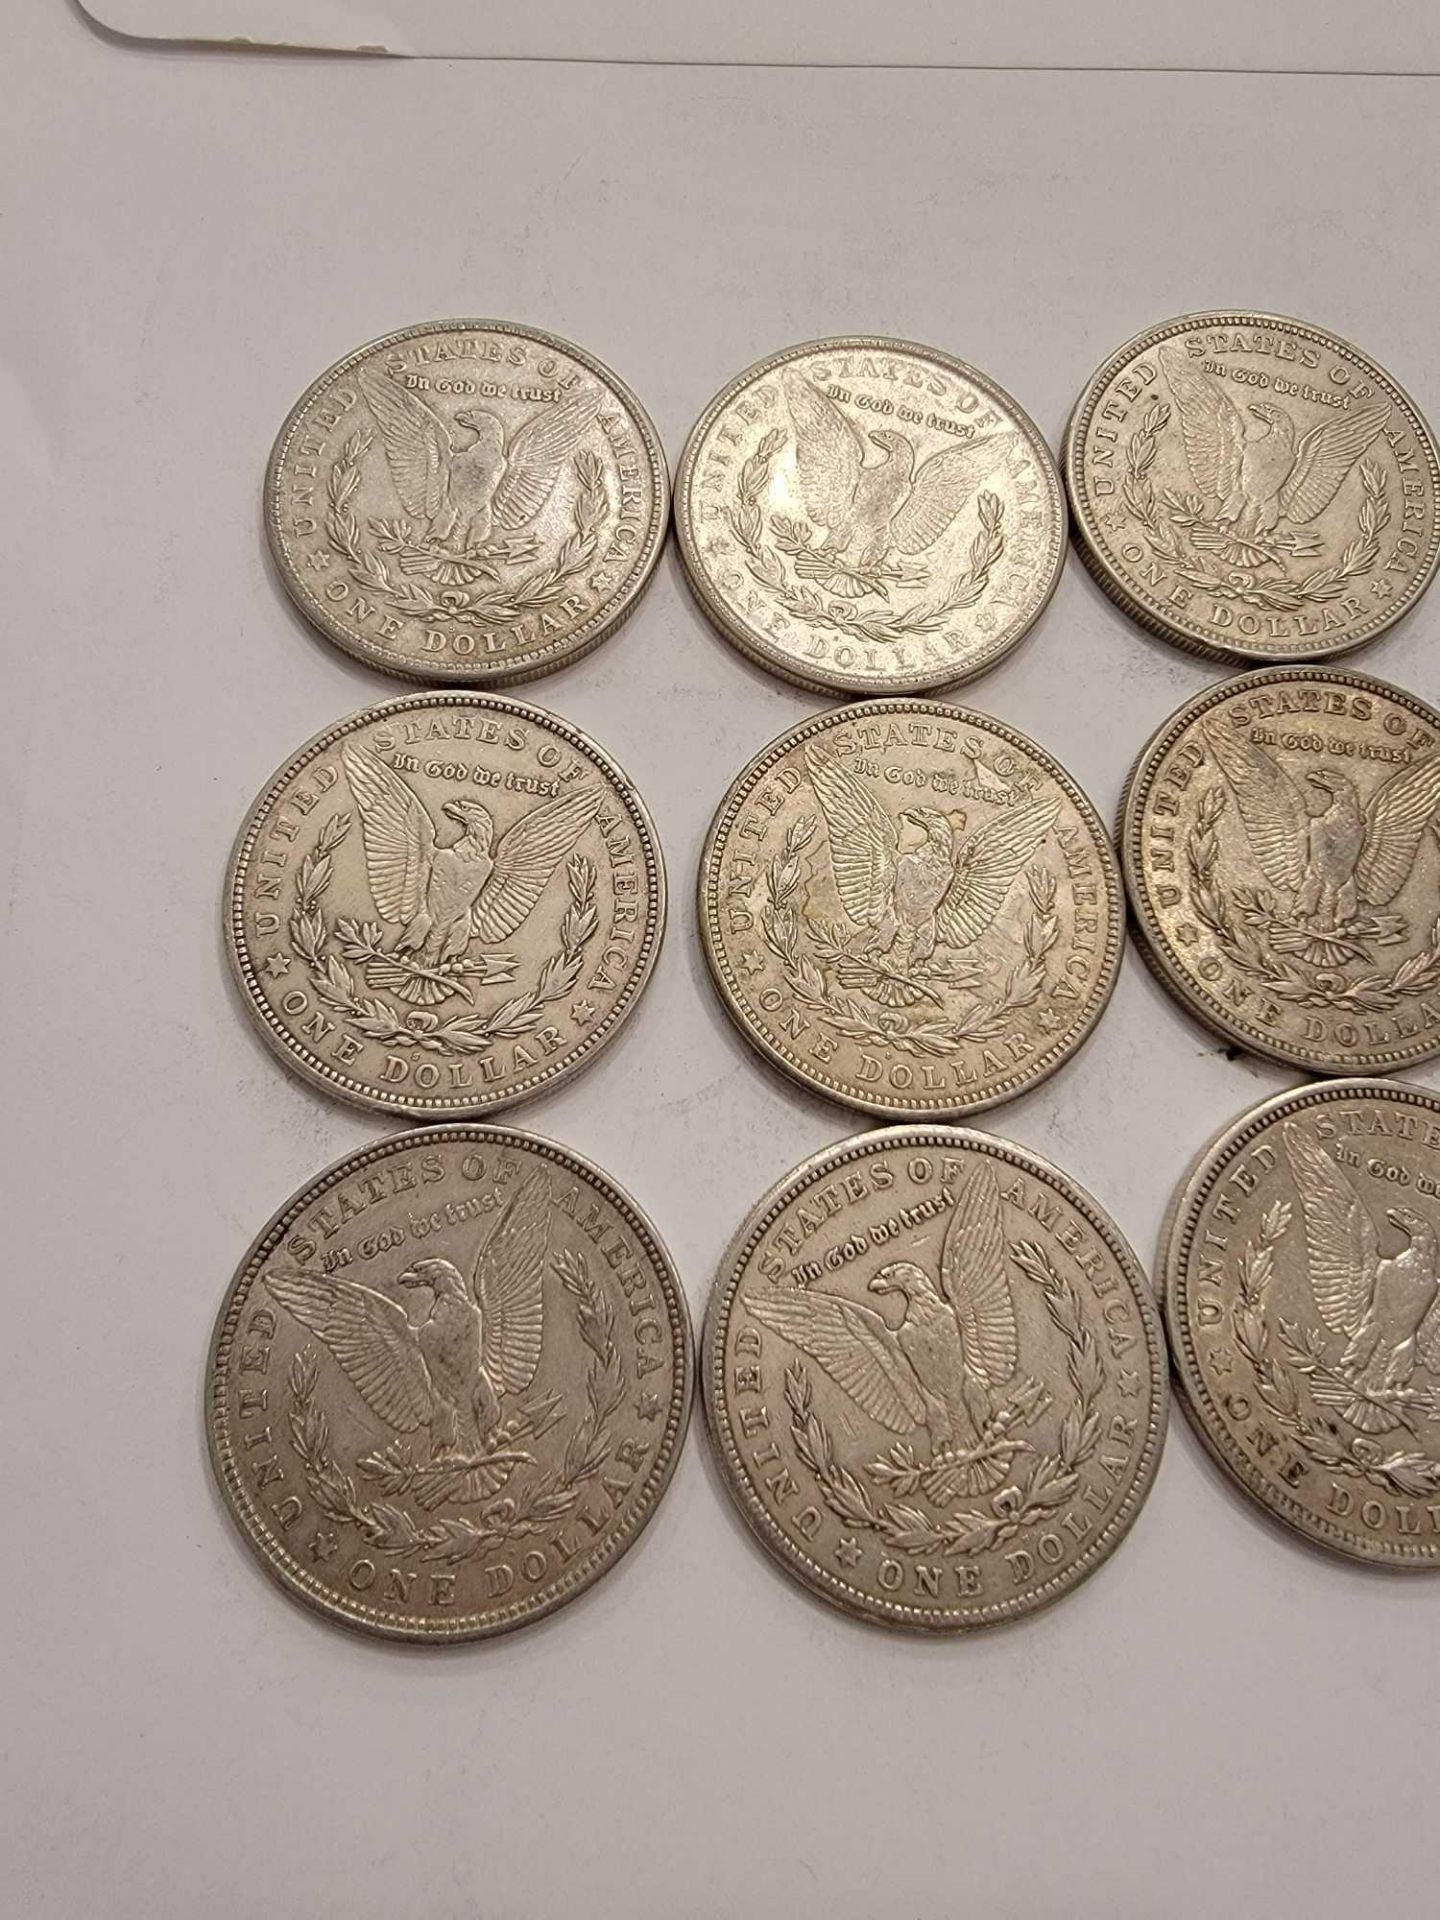 9 1921 morgan dollars - Image 5 of 6